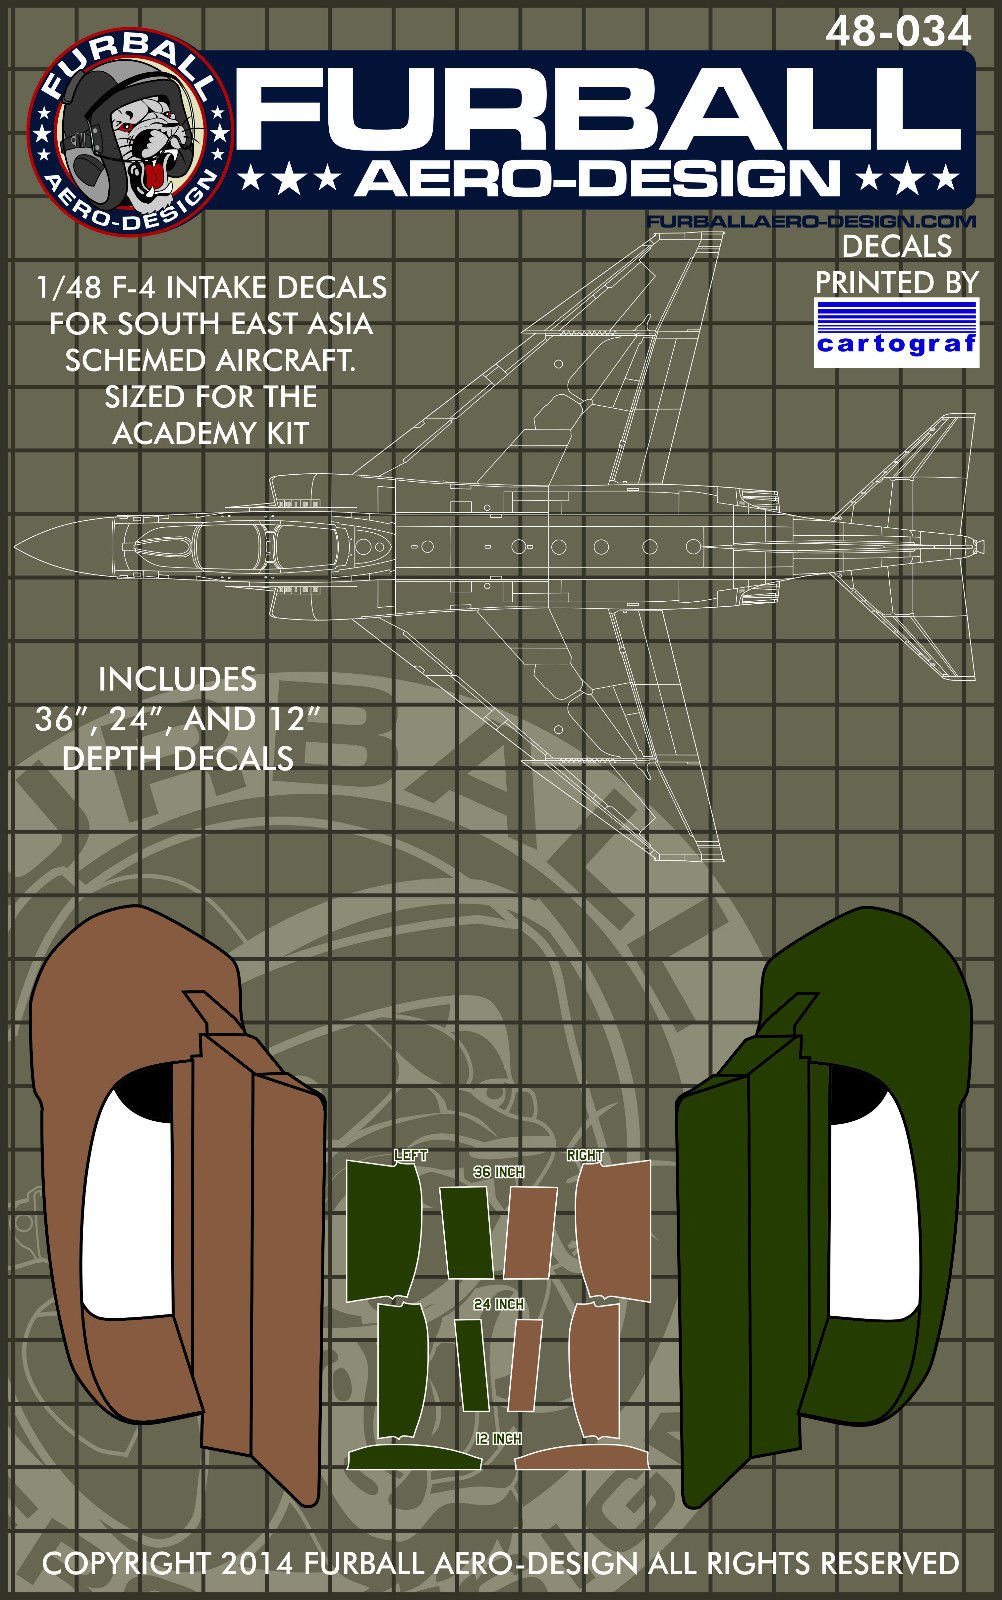 1/48 F-4 鬼怪II战斗机进气道东南亚迷彩贴纸